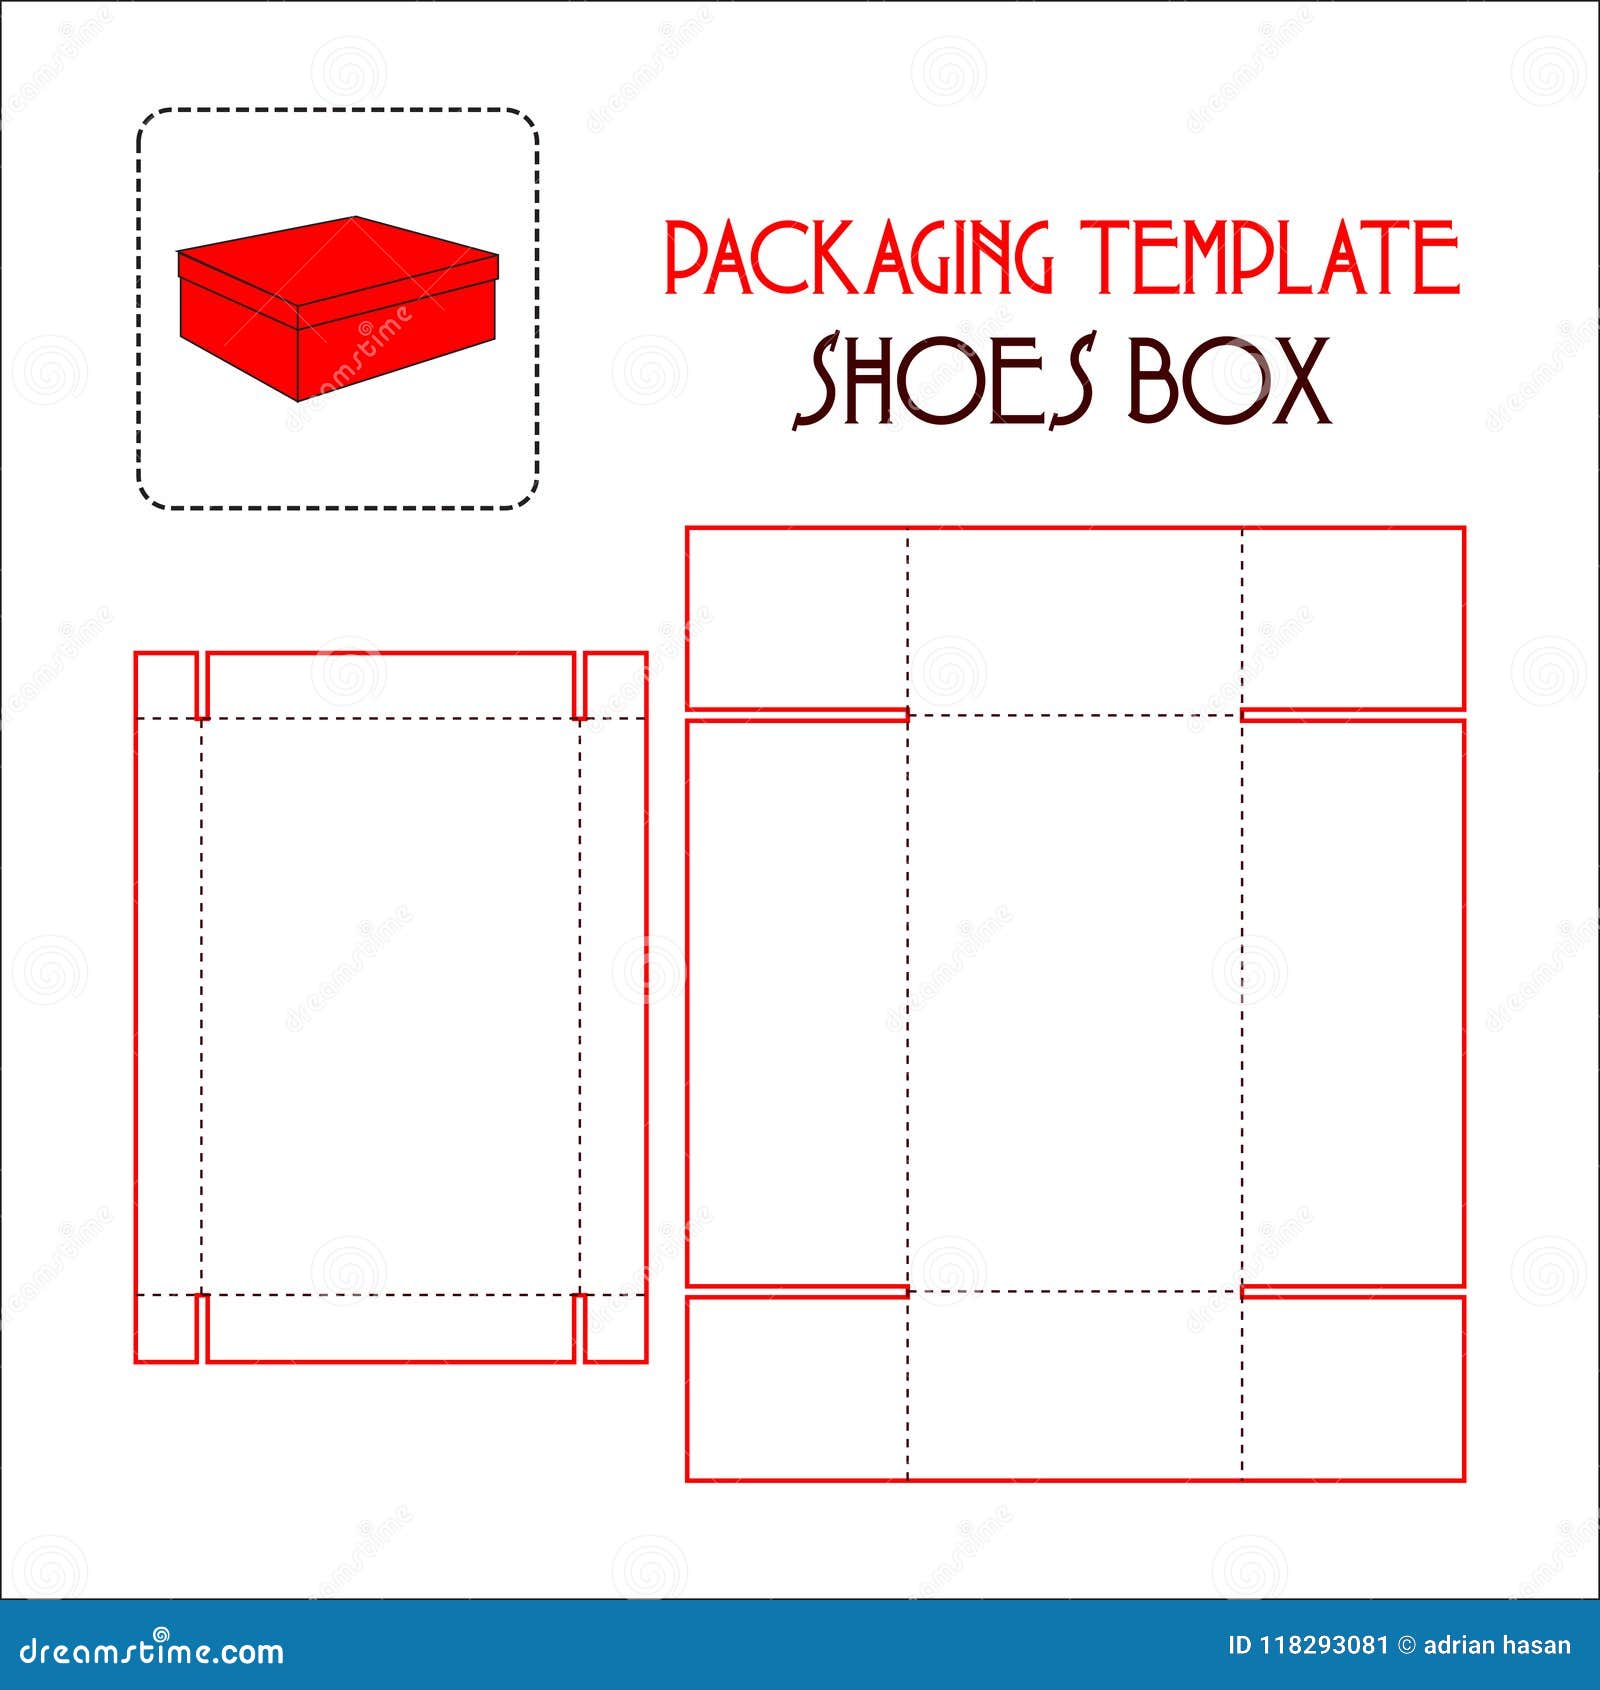 Download Packaging Template Stock Illustrations 207 213 Packaging Template Stock Illustrations Vectors Clipart Dreamstime